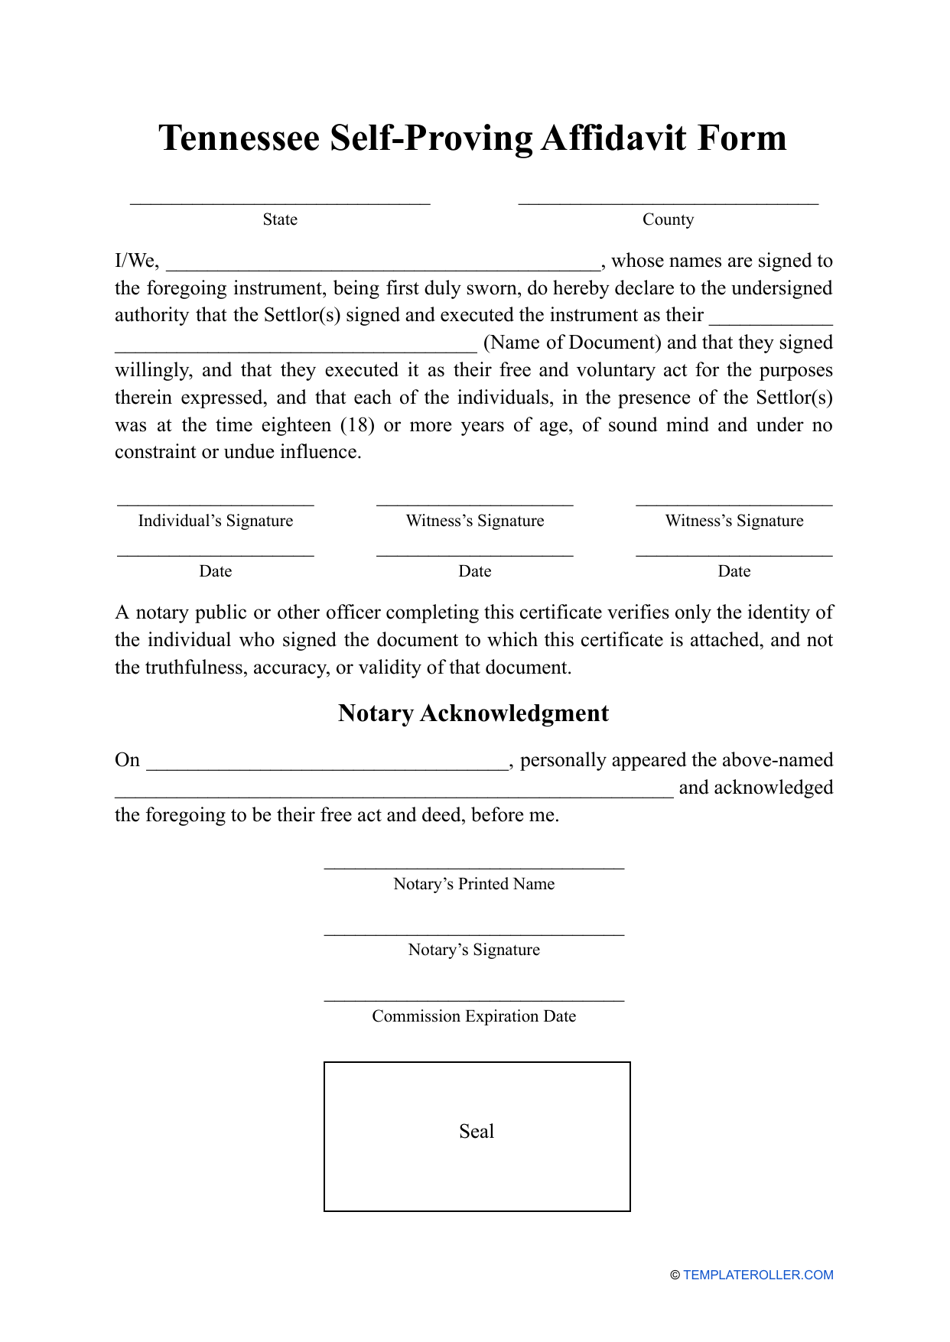 Self-proving Affidavit Form - Tennessee, Page 1